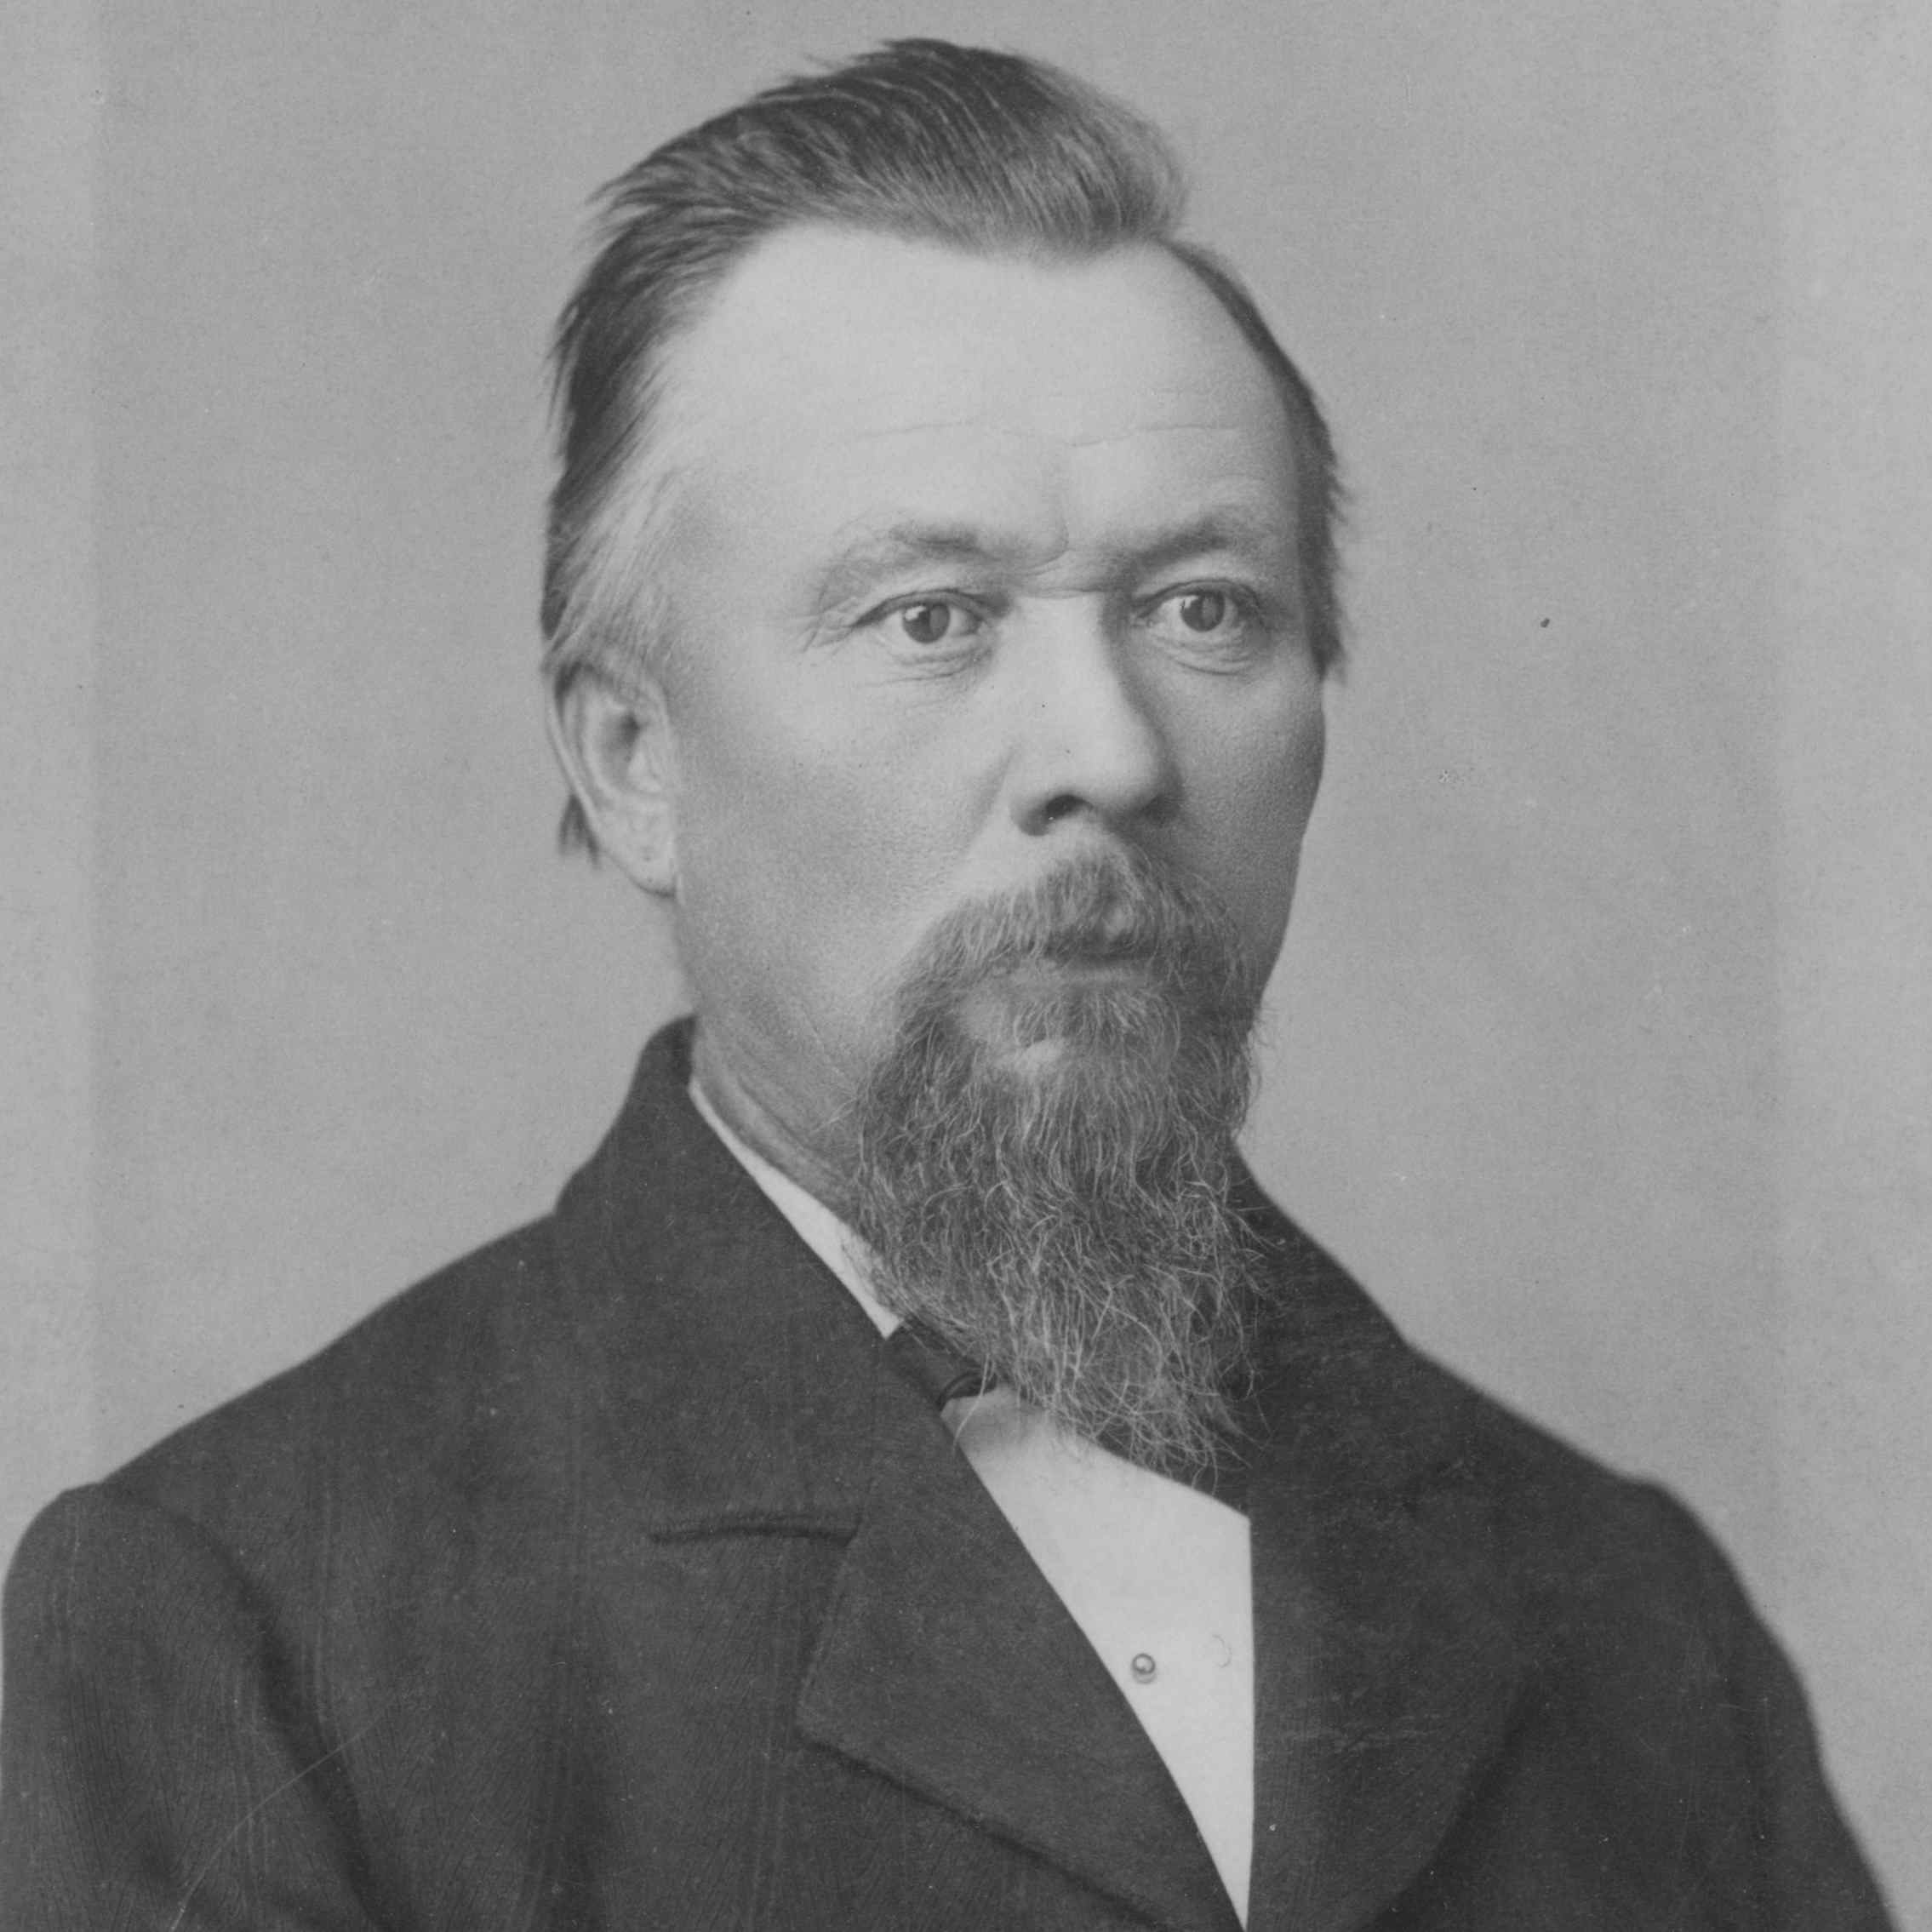 Dorius, Carl Christian Nicolai